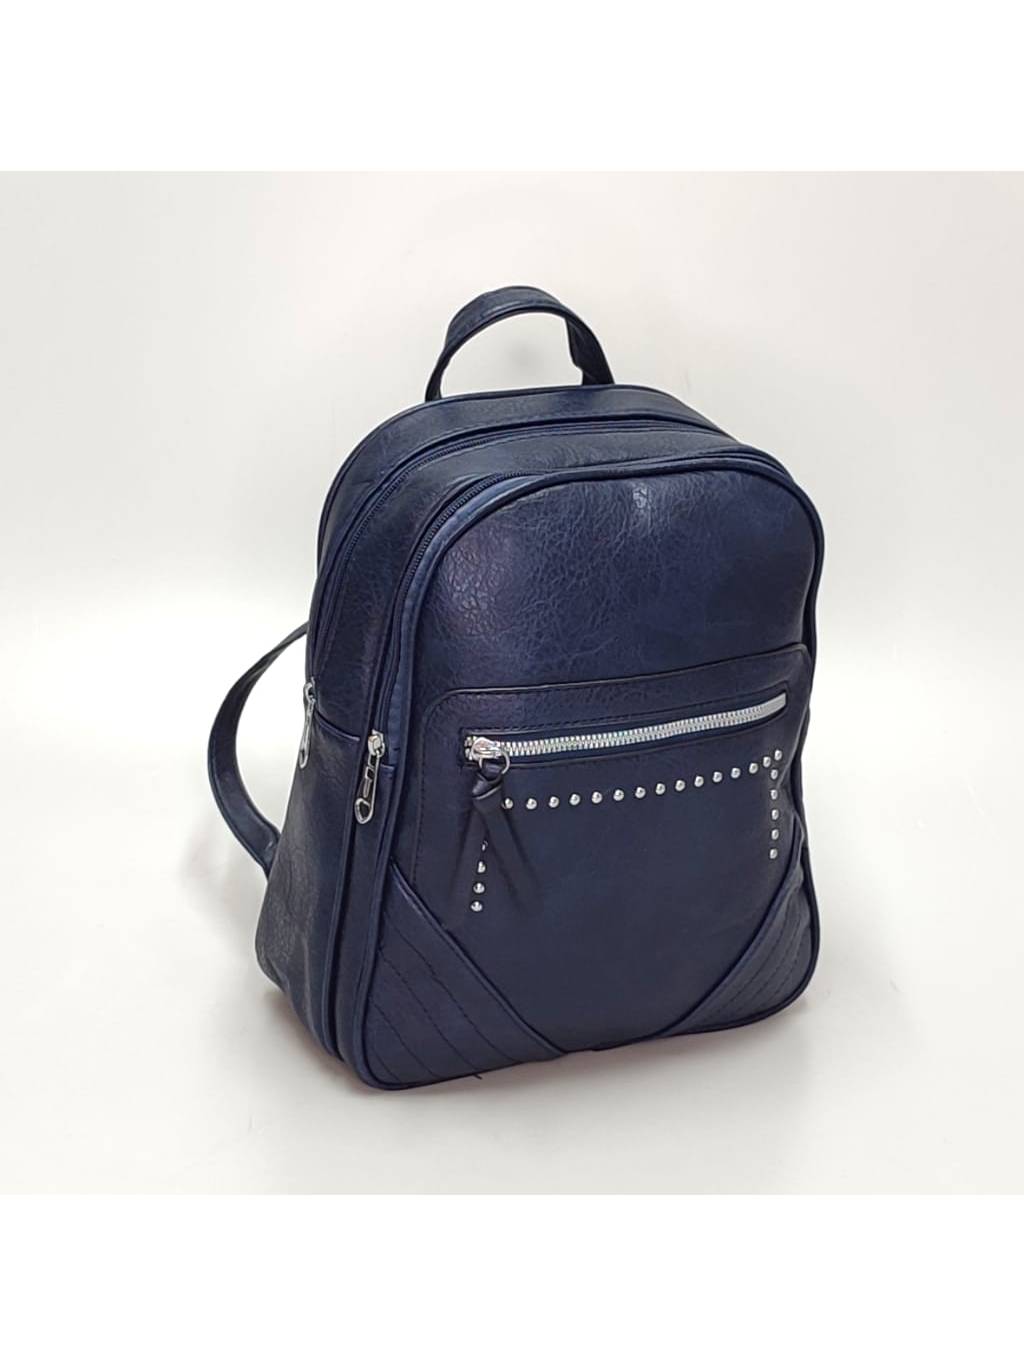 Dámsky ruksak 6301 tmavo modrý www.kabelky vypredaj (2)